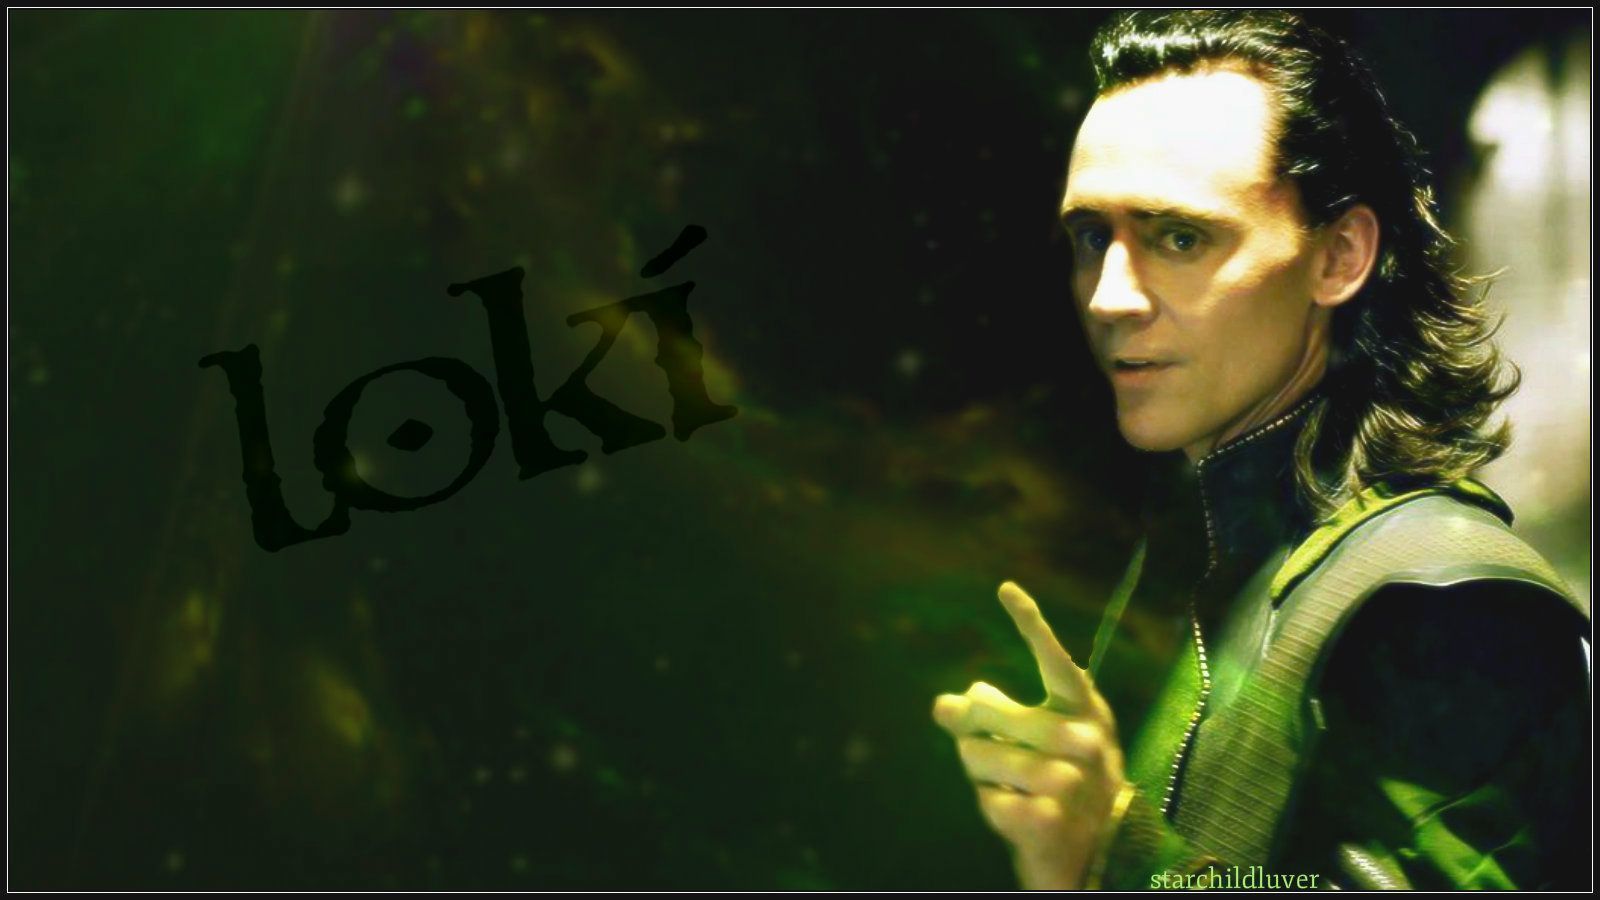 Tom Hiddleston as Loki - Tom Hiddleston Wallpaper (36653068) - Fanpop